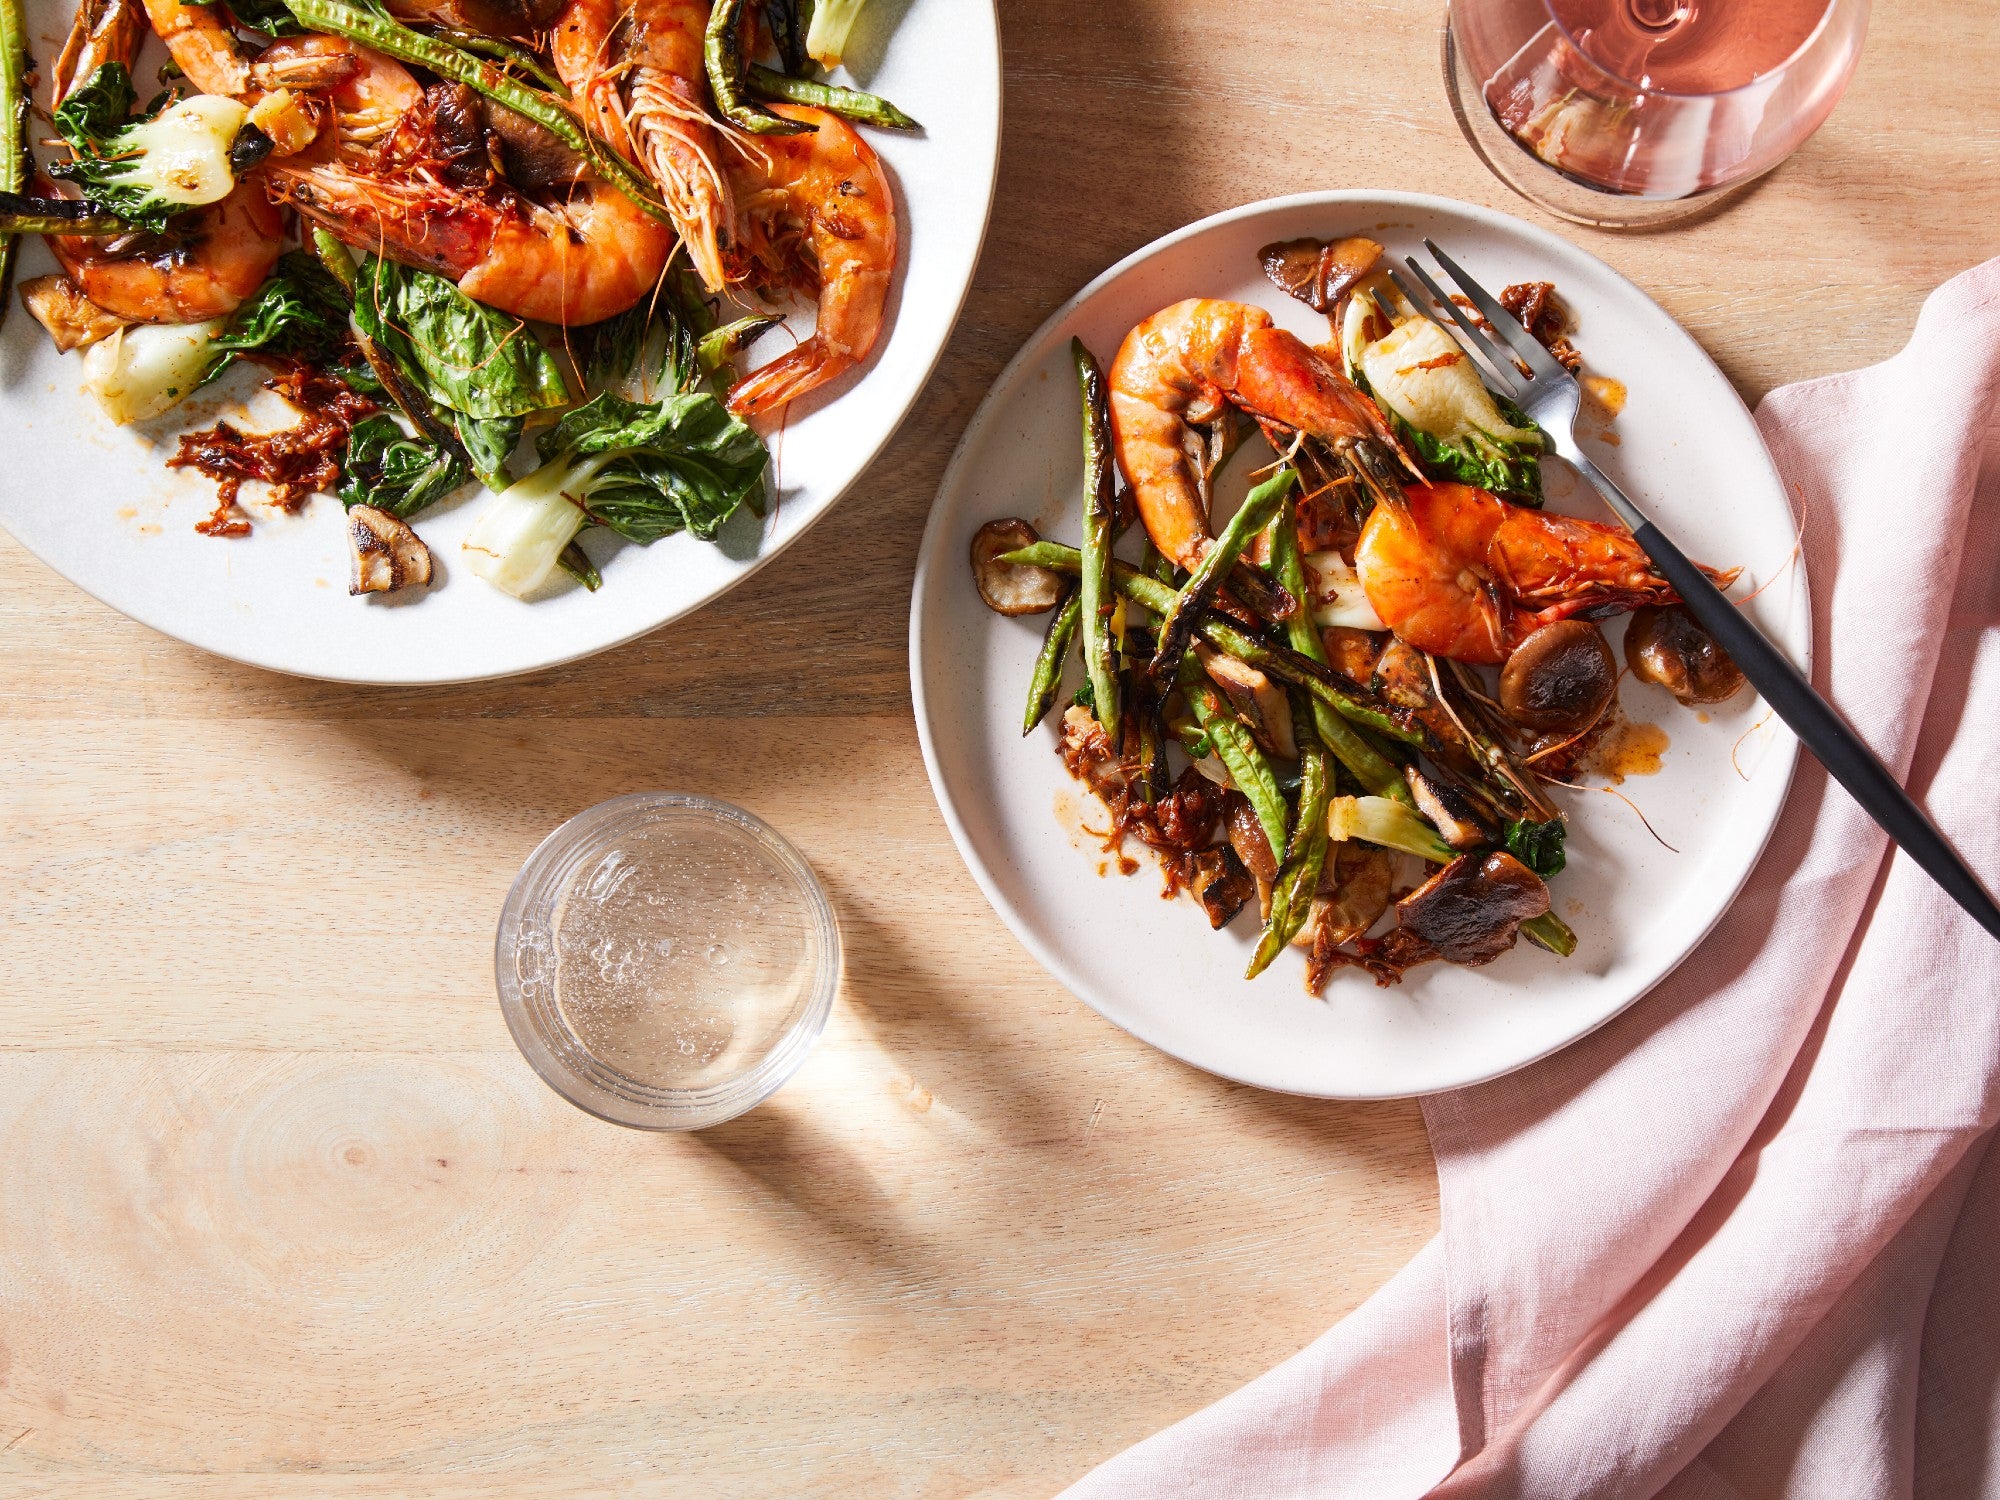 Shrimp Stir Fry in our NEW 14” Wok tonight! 🍤 #HexClad